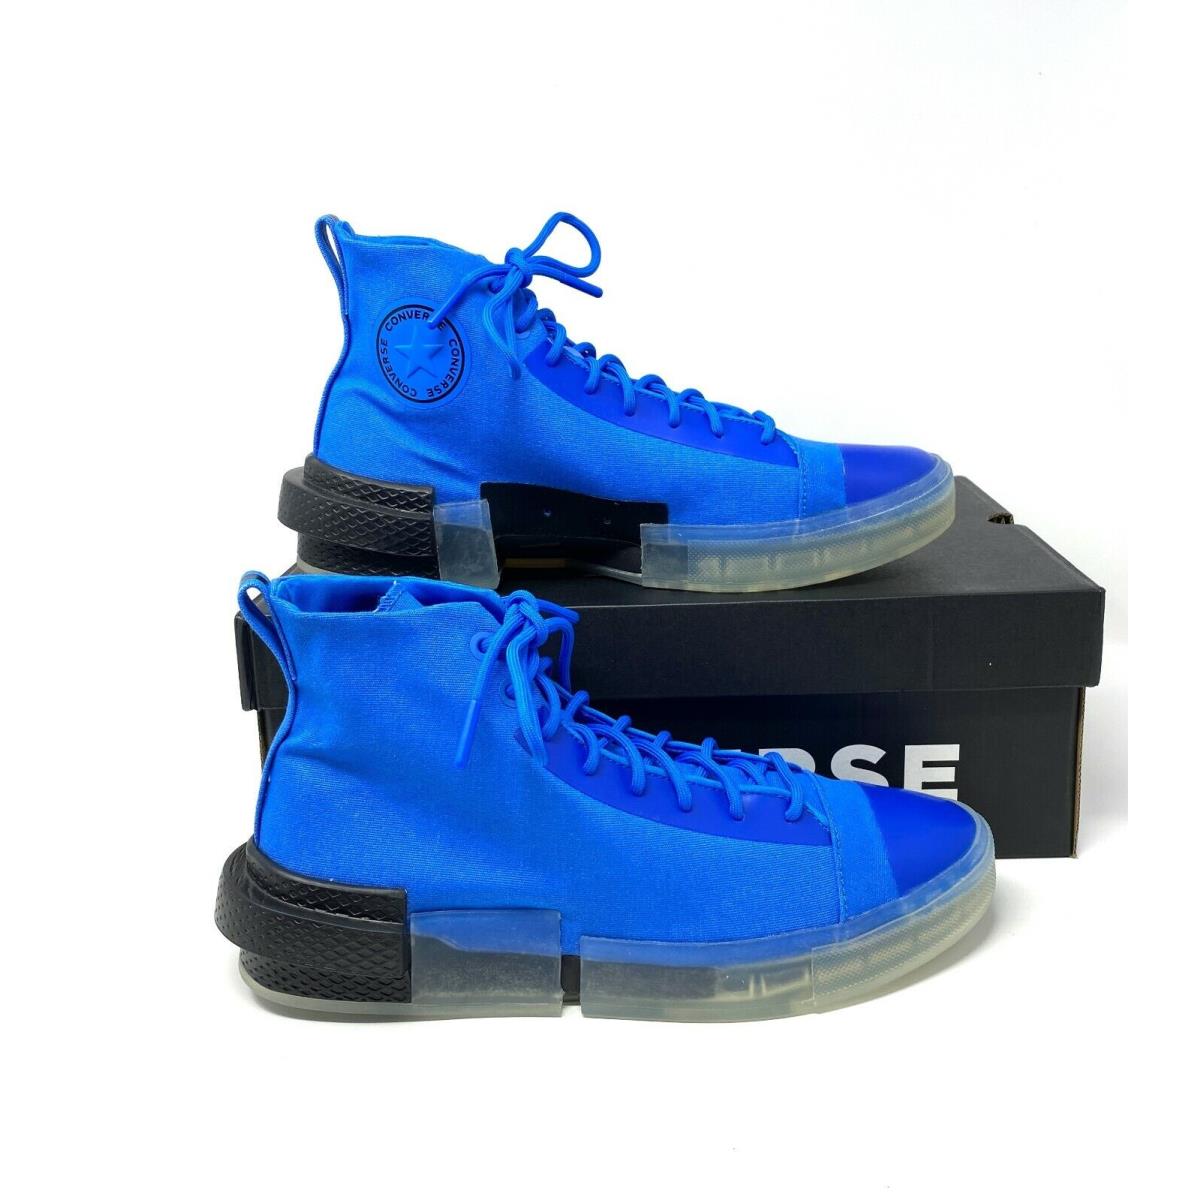 Converse Digital Terrain AS Disrupt CX High Top Blue Canvas Sneaker Mens 170362C